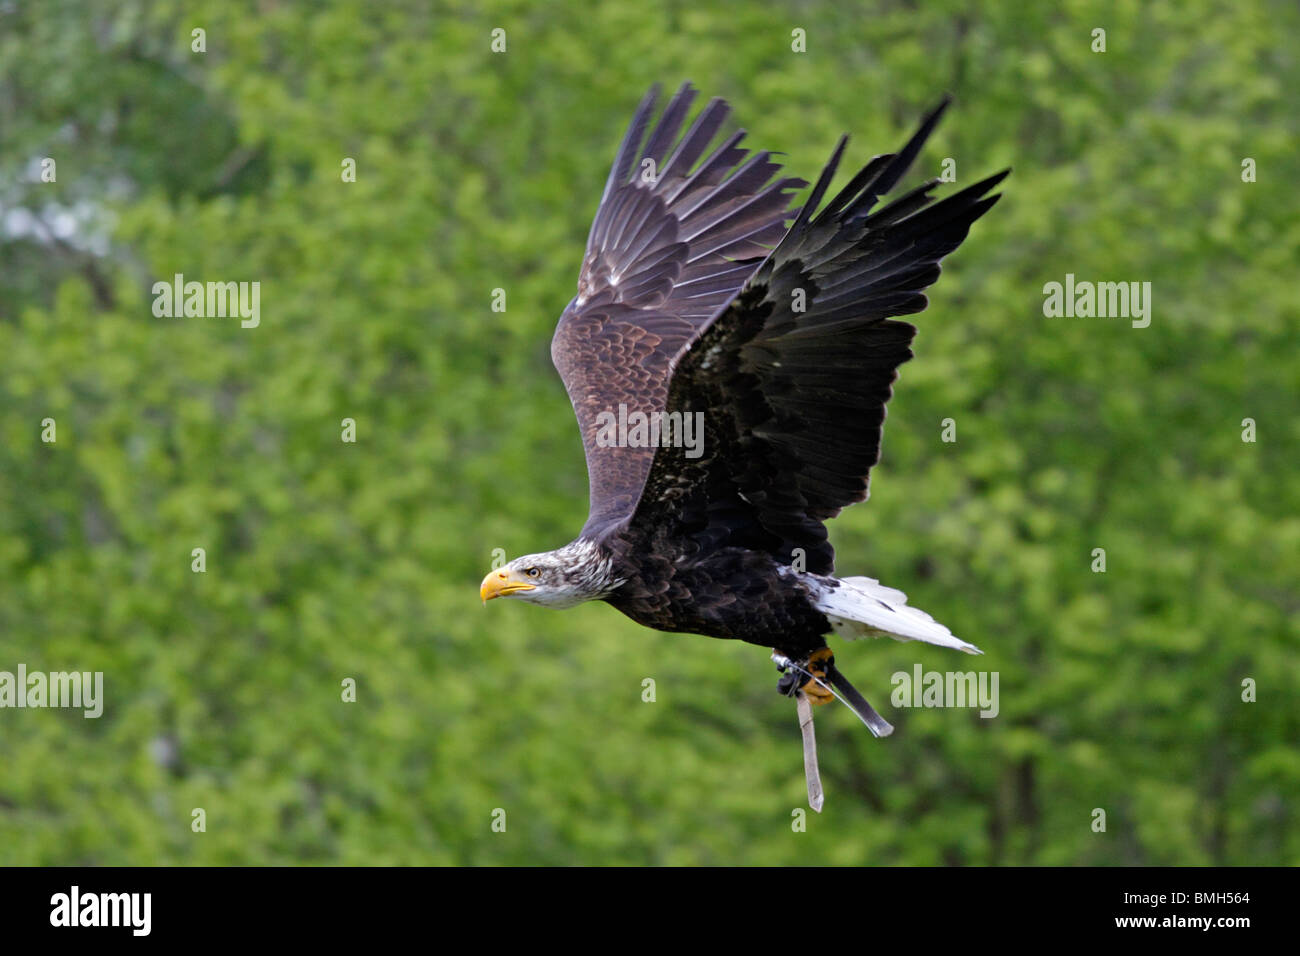 white-tailed eagle at flight Stock Photo